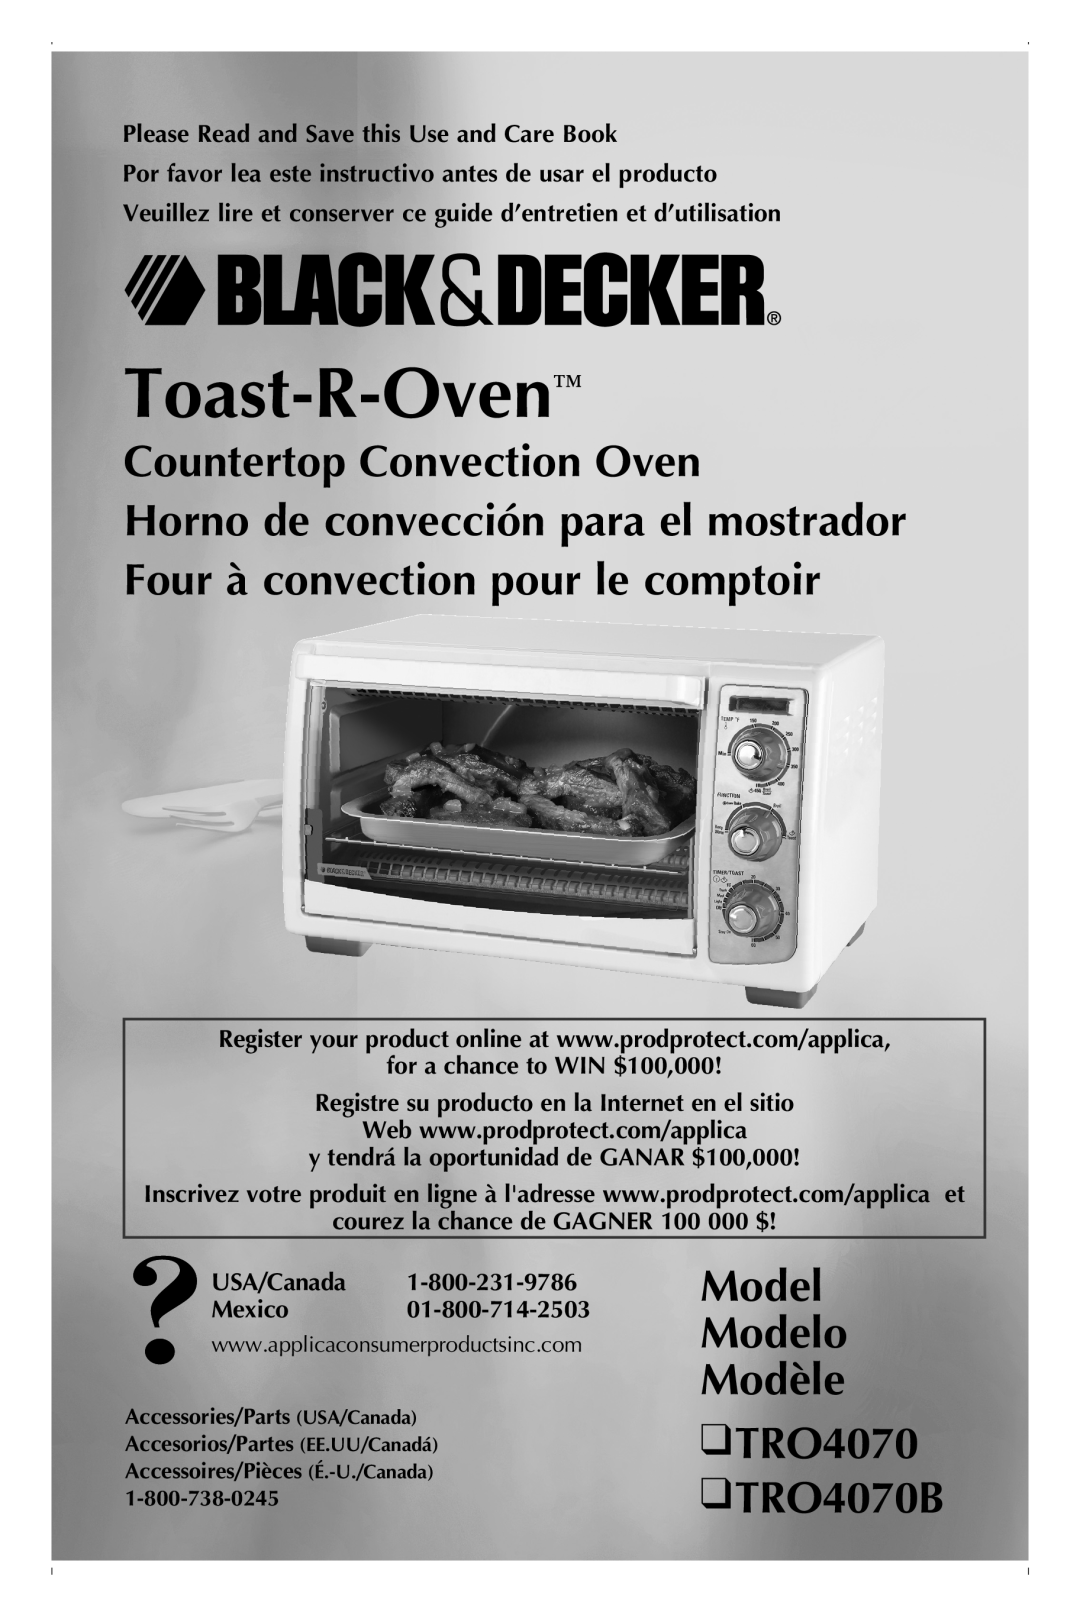 Black & Decker manual Countertop Convection Oven, Model Modelo Modèle TRO4070 TRO4070B, Toast-R-Oven, USA/Canada Mexico 